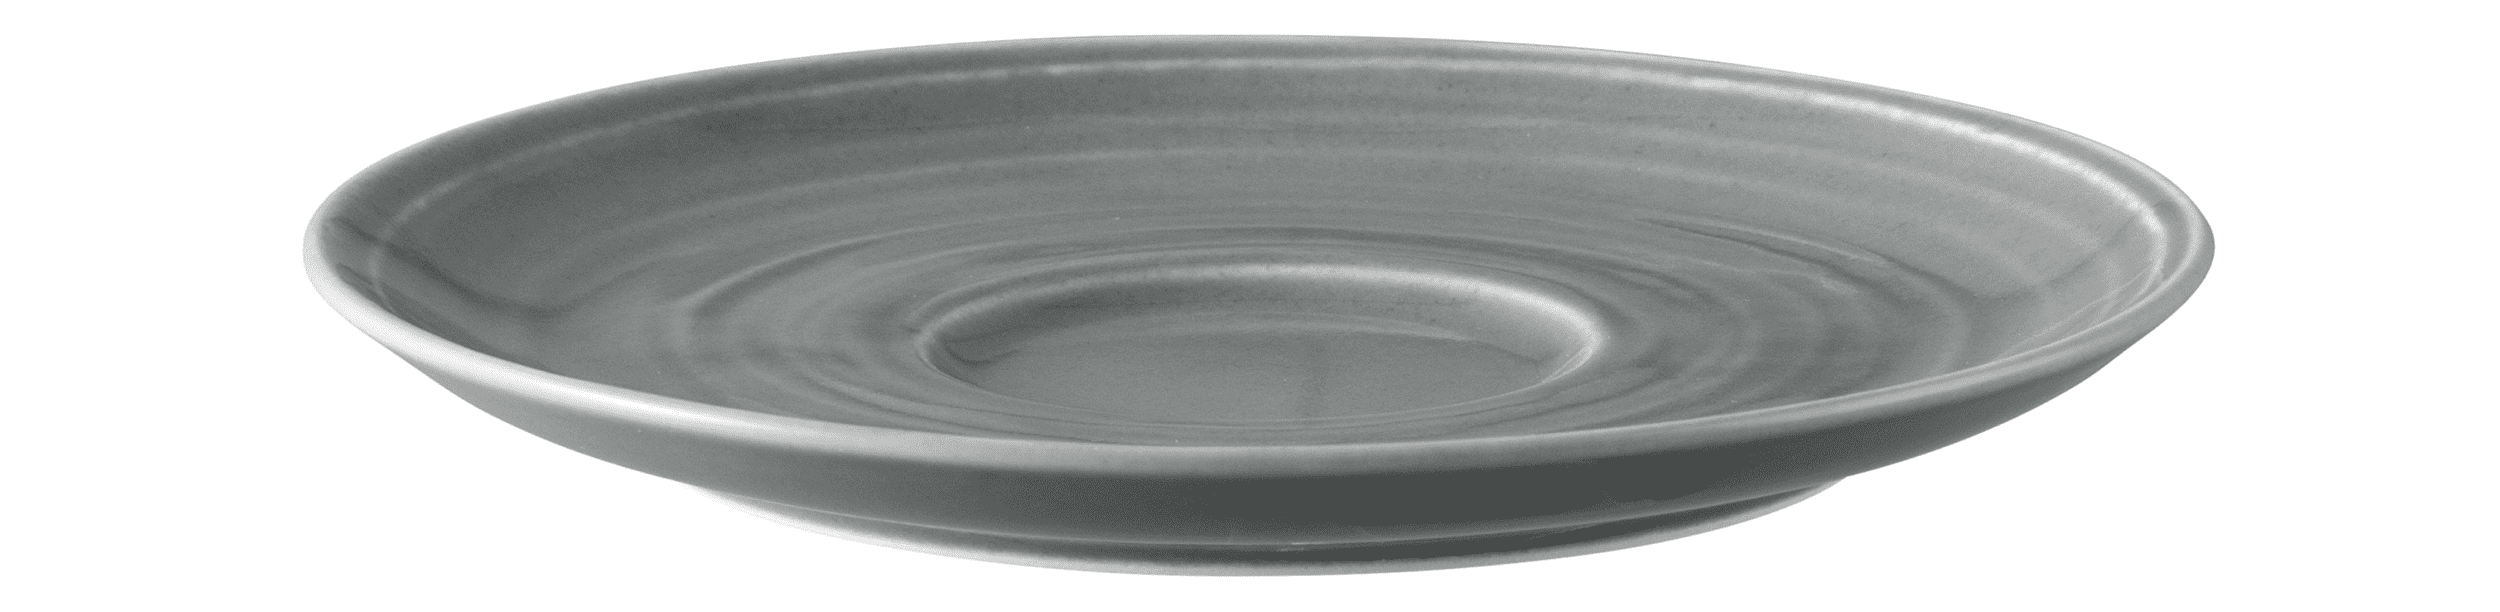 Seltmann Porzellan Terra Perlgrau Kombi-Untertasse groß 16,5 cm